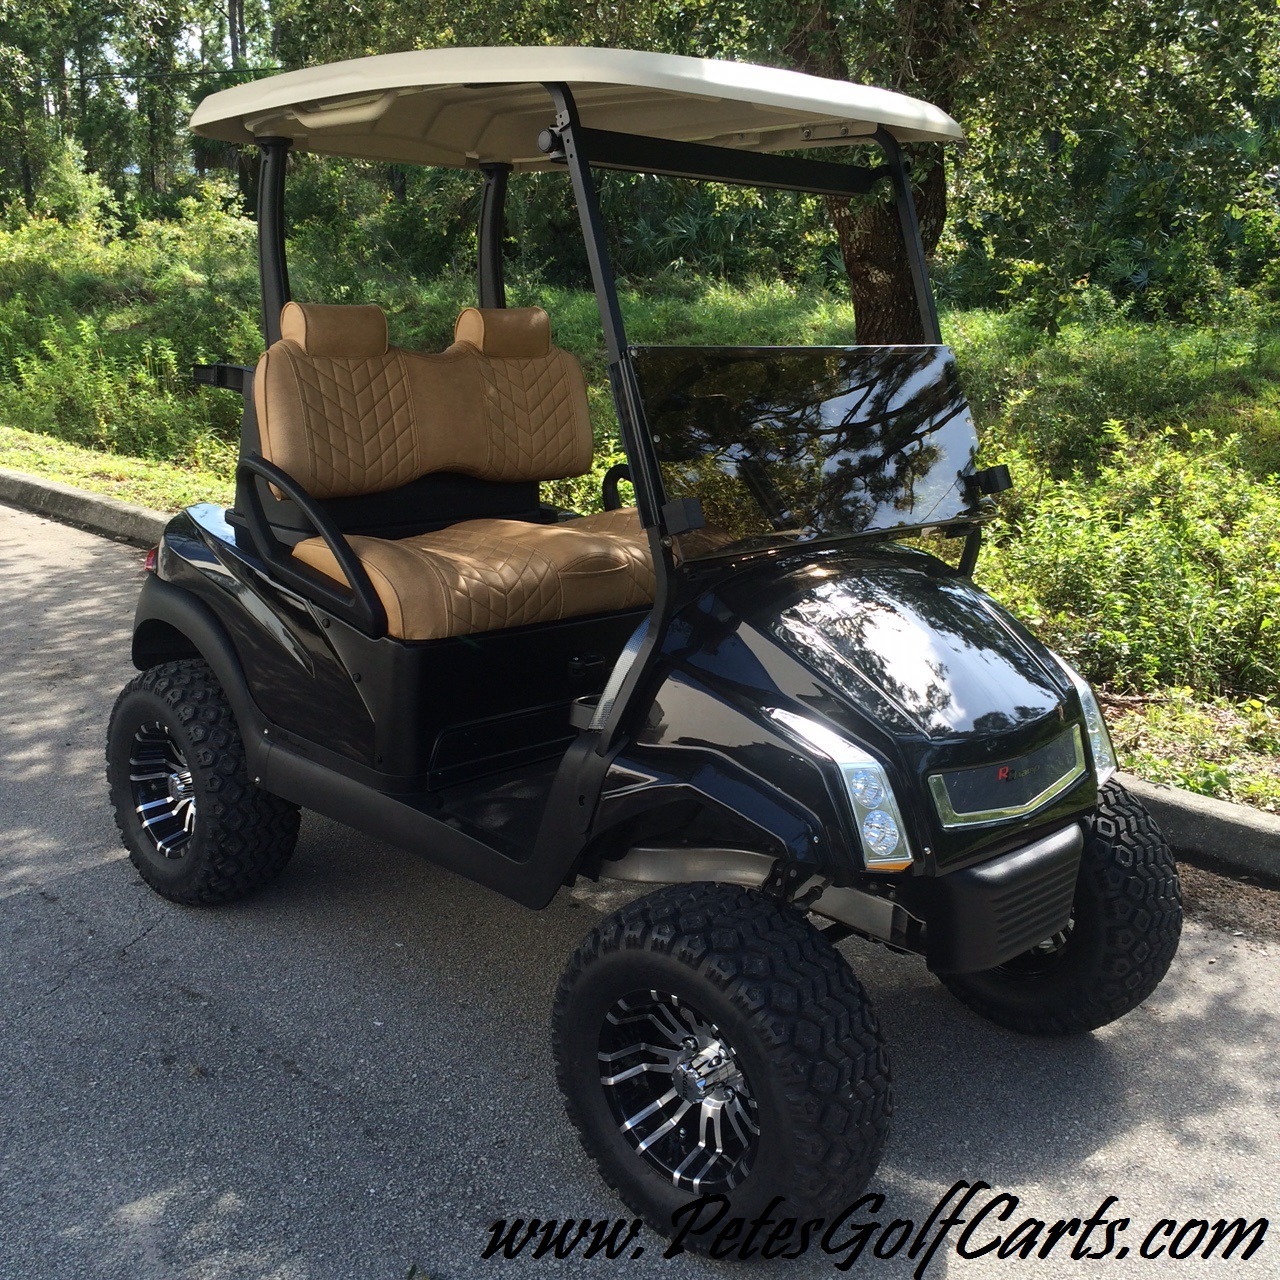 Club car golf cart body kits information